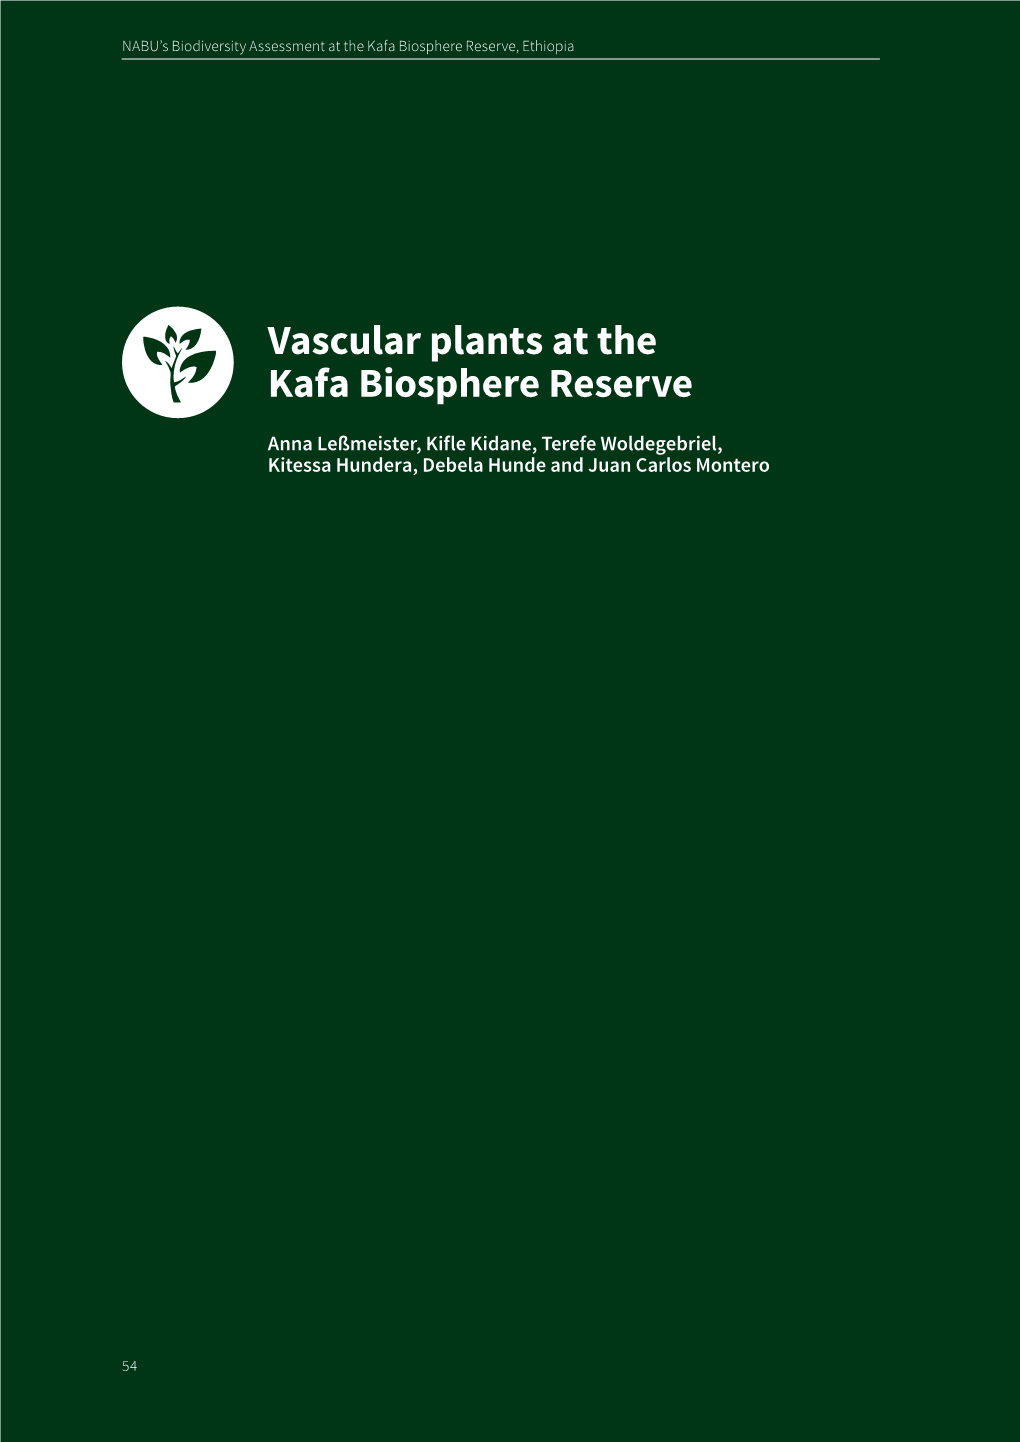 Vascular Plants at the Kafa Biosphere Reserve